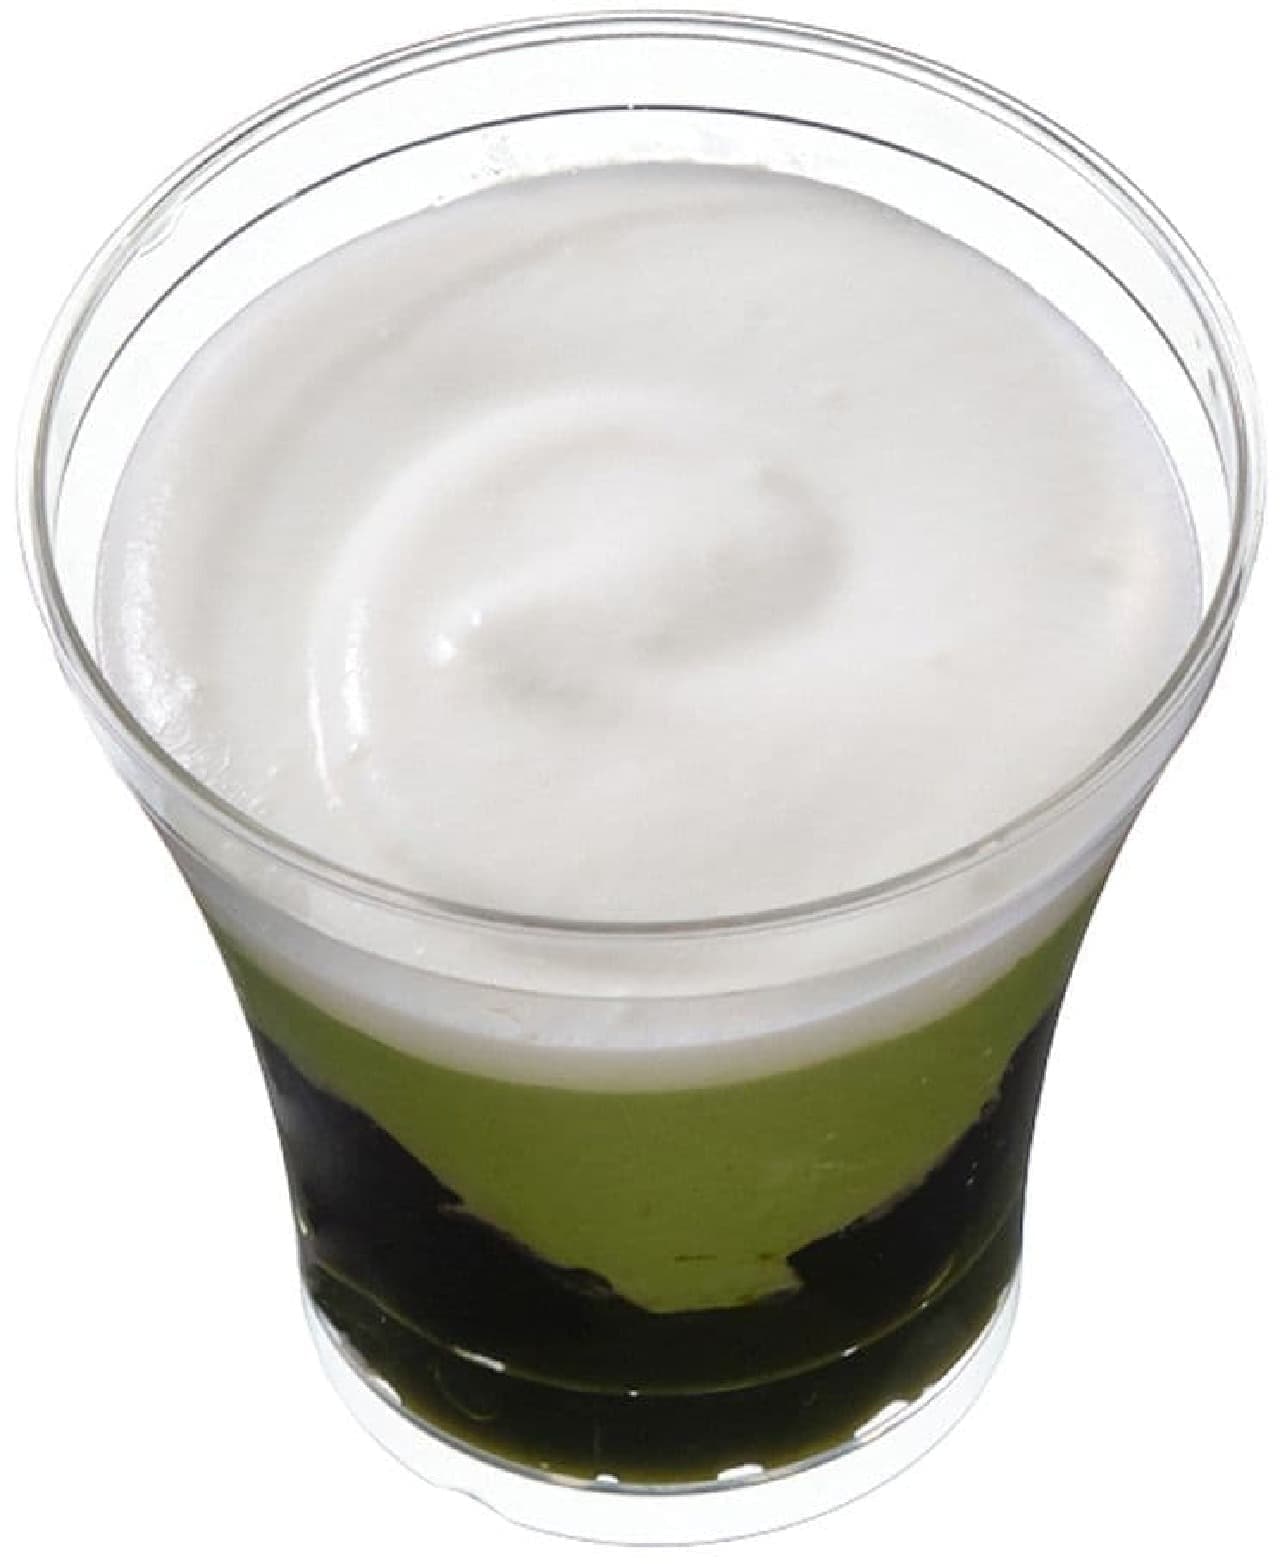 7-ELEVEN "Uji Green Tea Strawberry Cake with Green Tea Latte".